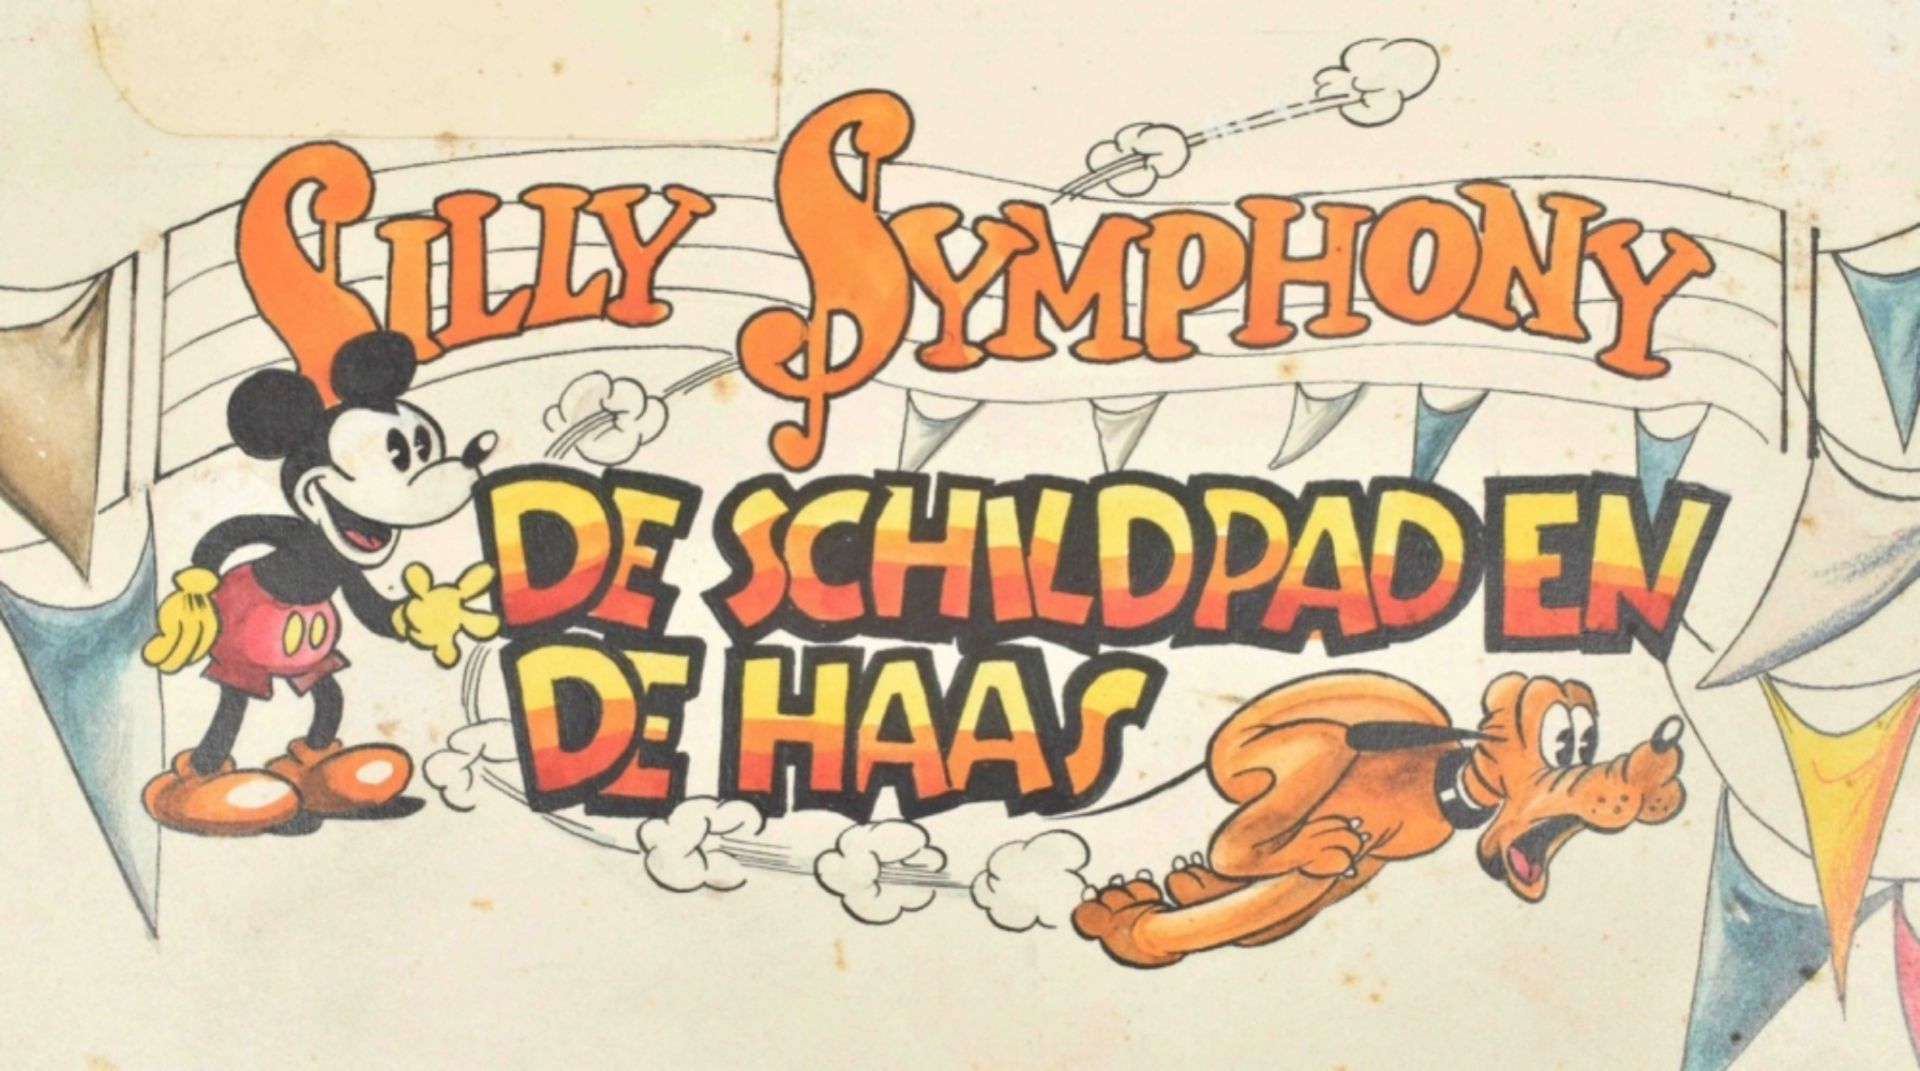 Anon. Silly Symphony. De Schildpad en de Haas - Bild 2 aus 2